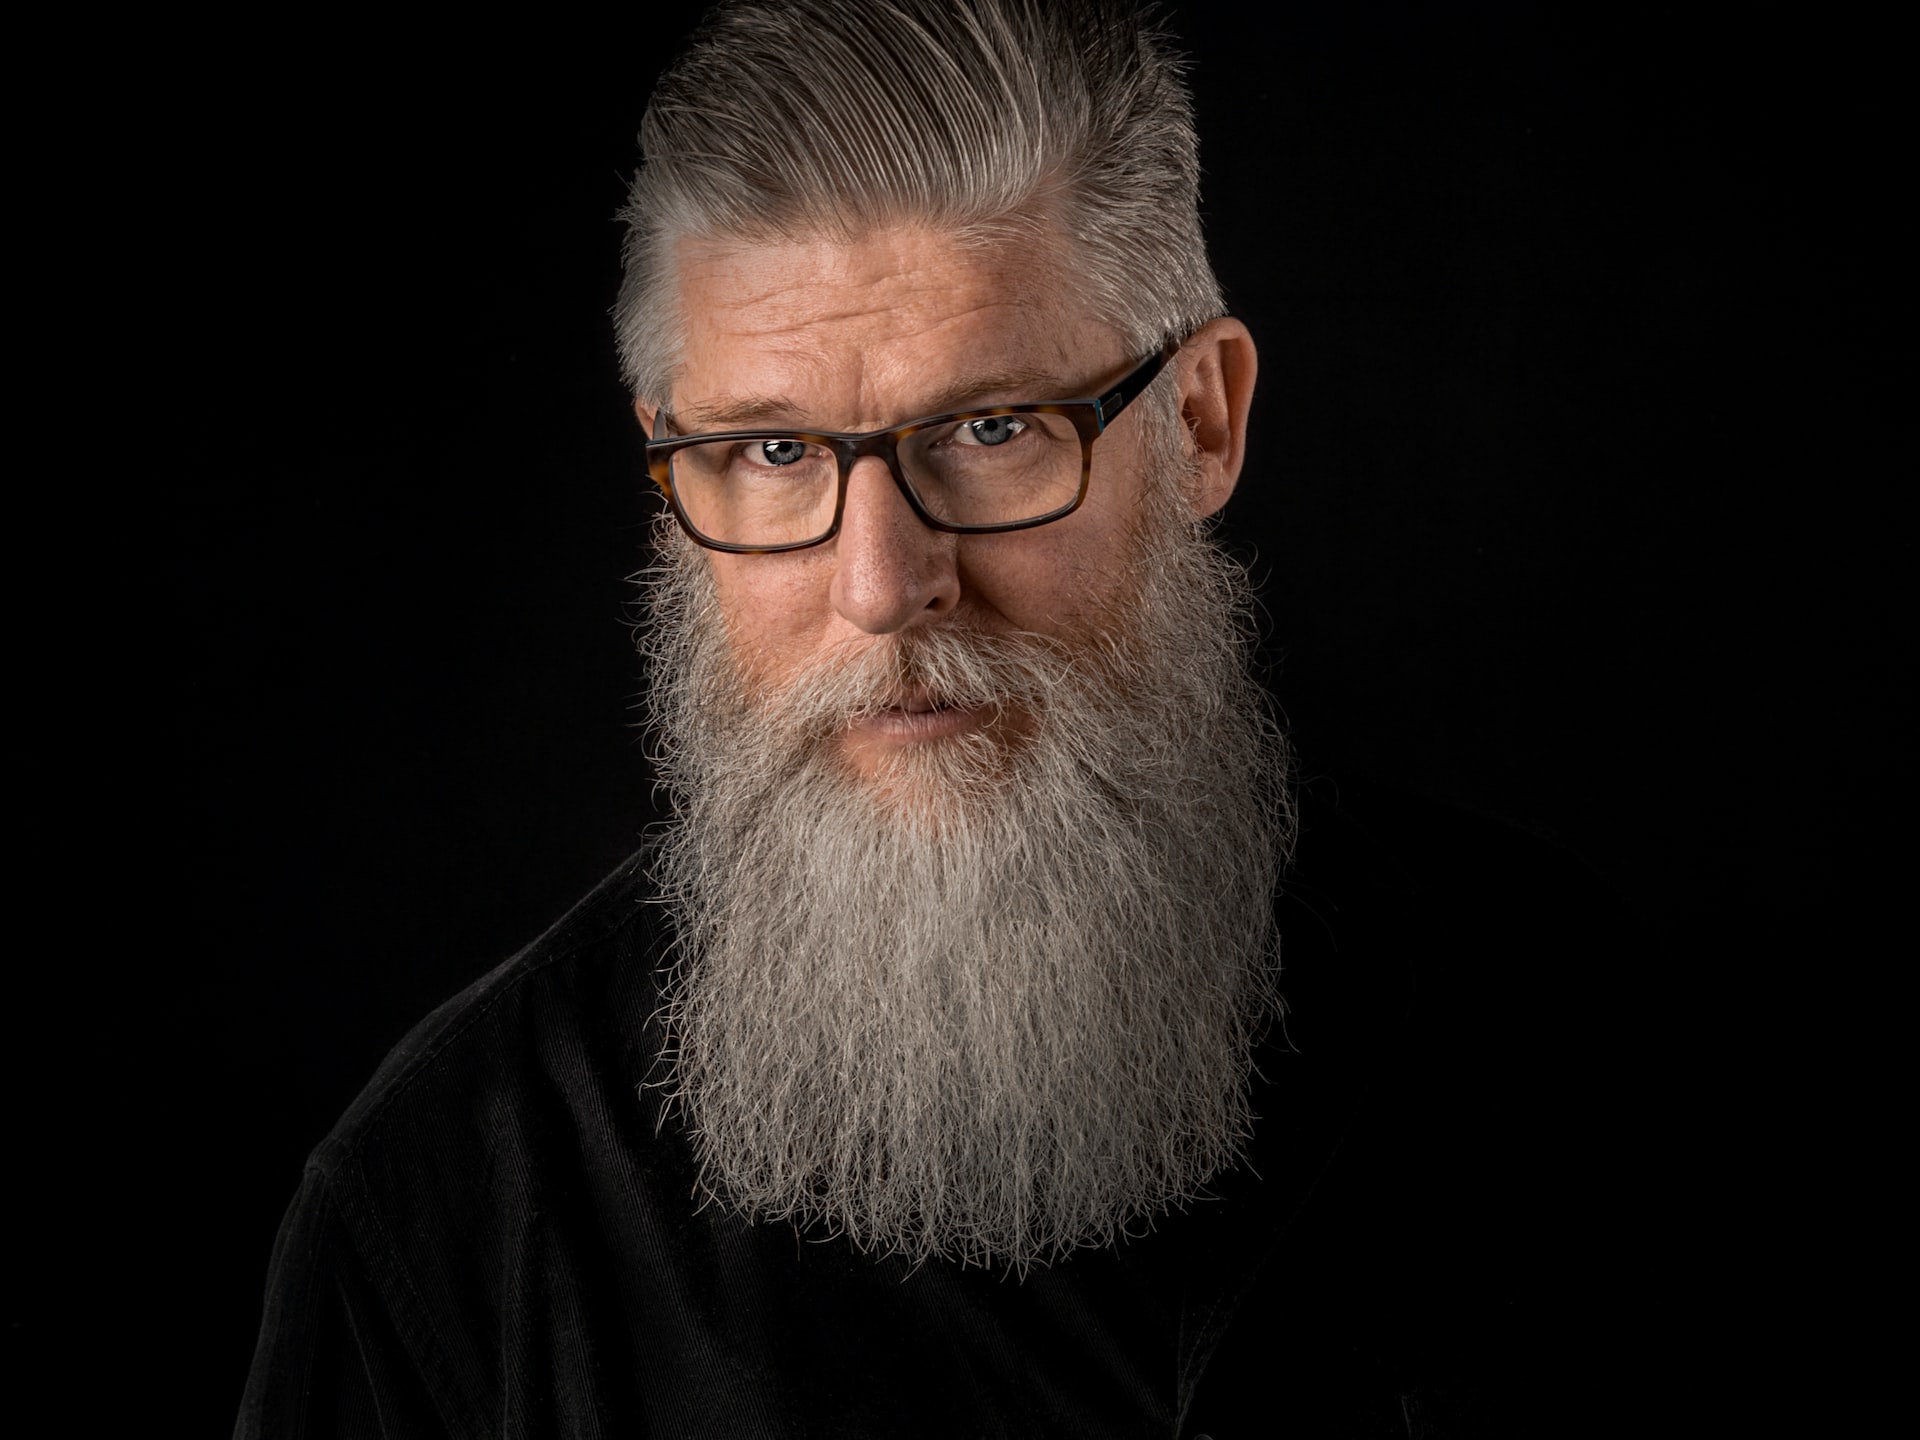 Older man with gray beard.